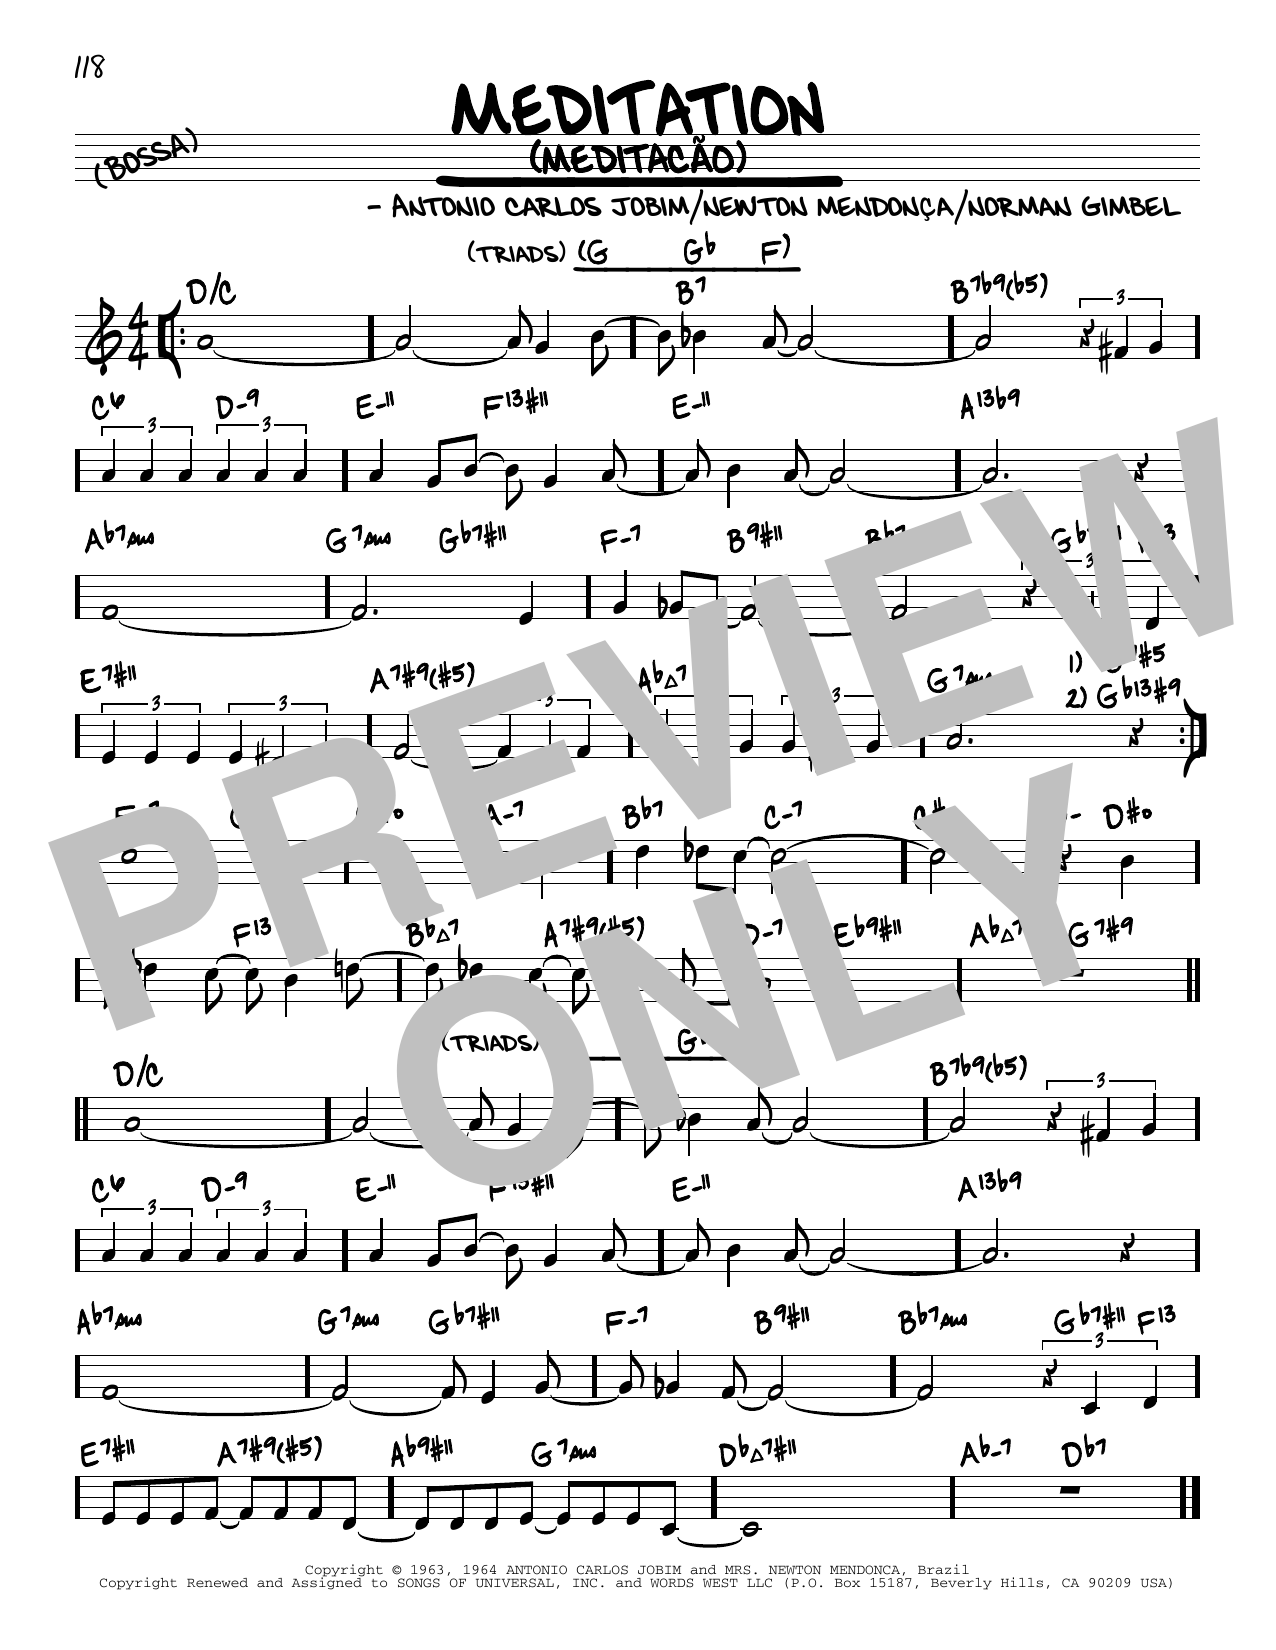 Download Antonio Carlos Jobim Meditation (Meditacao) (arr. David Hazeltine) Sheet Music and learn how to play Real Book – Enhanced Chords PDF digital score in minutes